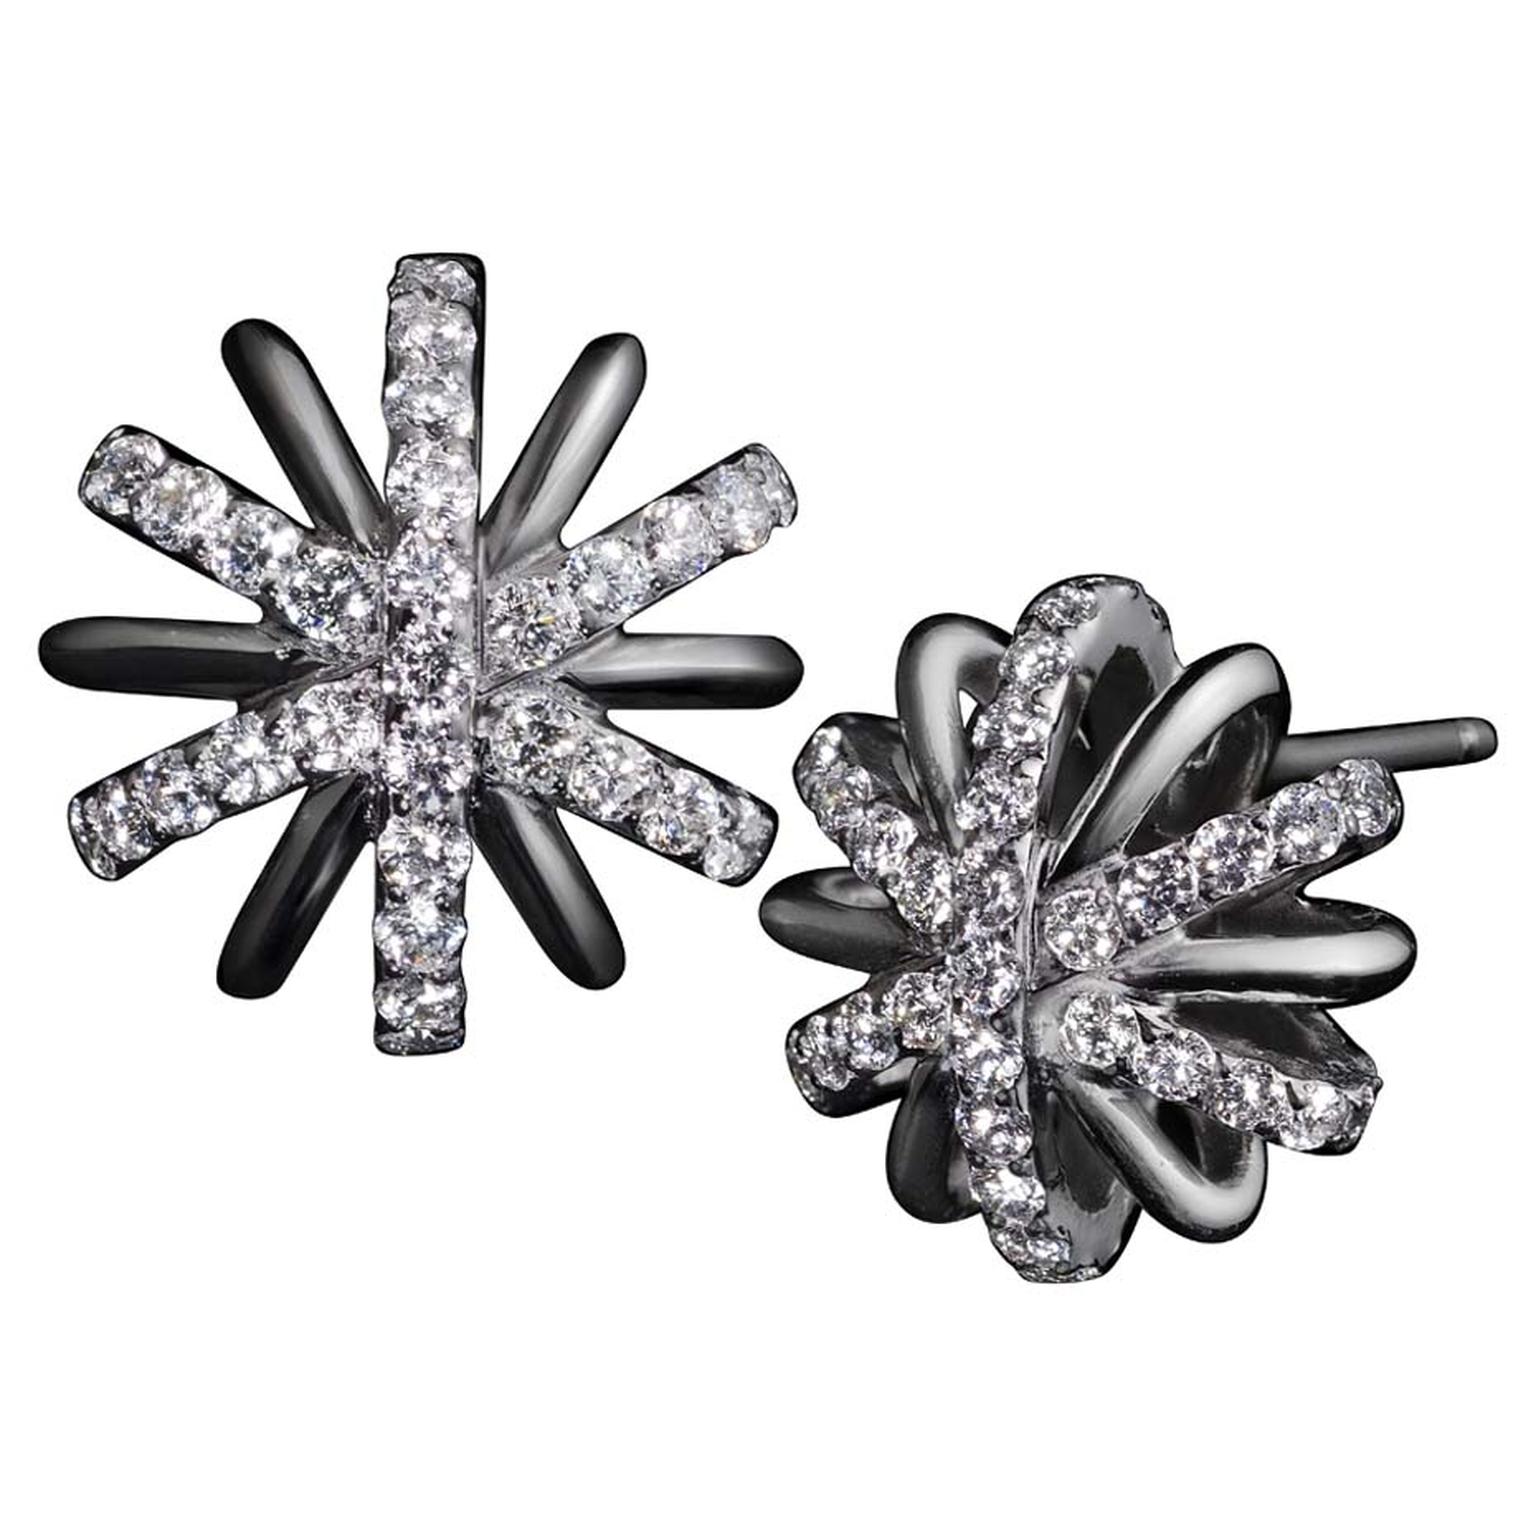 Alexandra Mor limited-edition Diamond Snowflake earrings in platinum